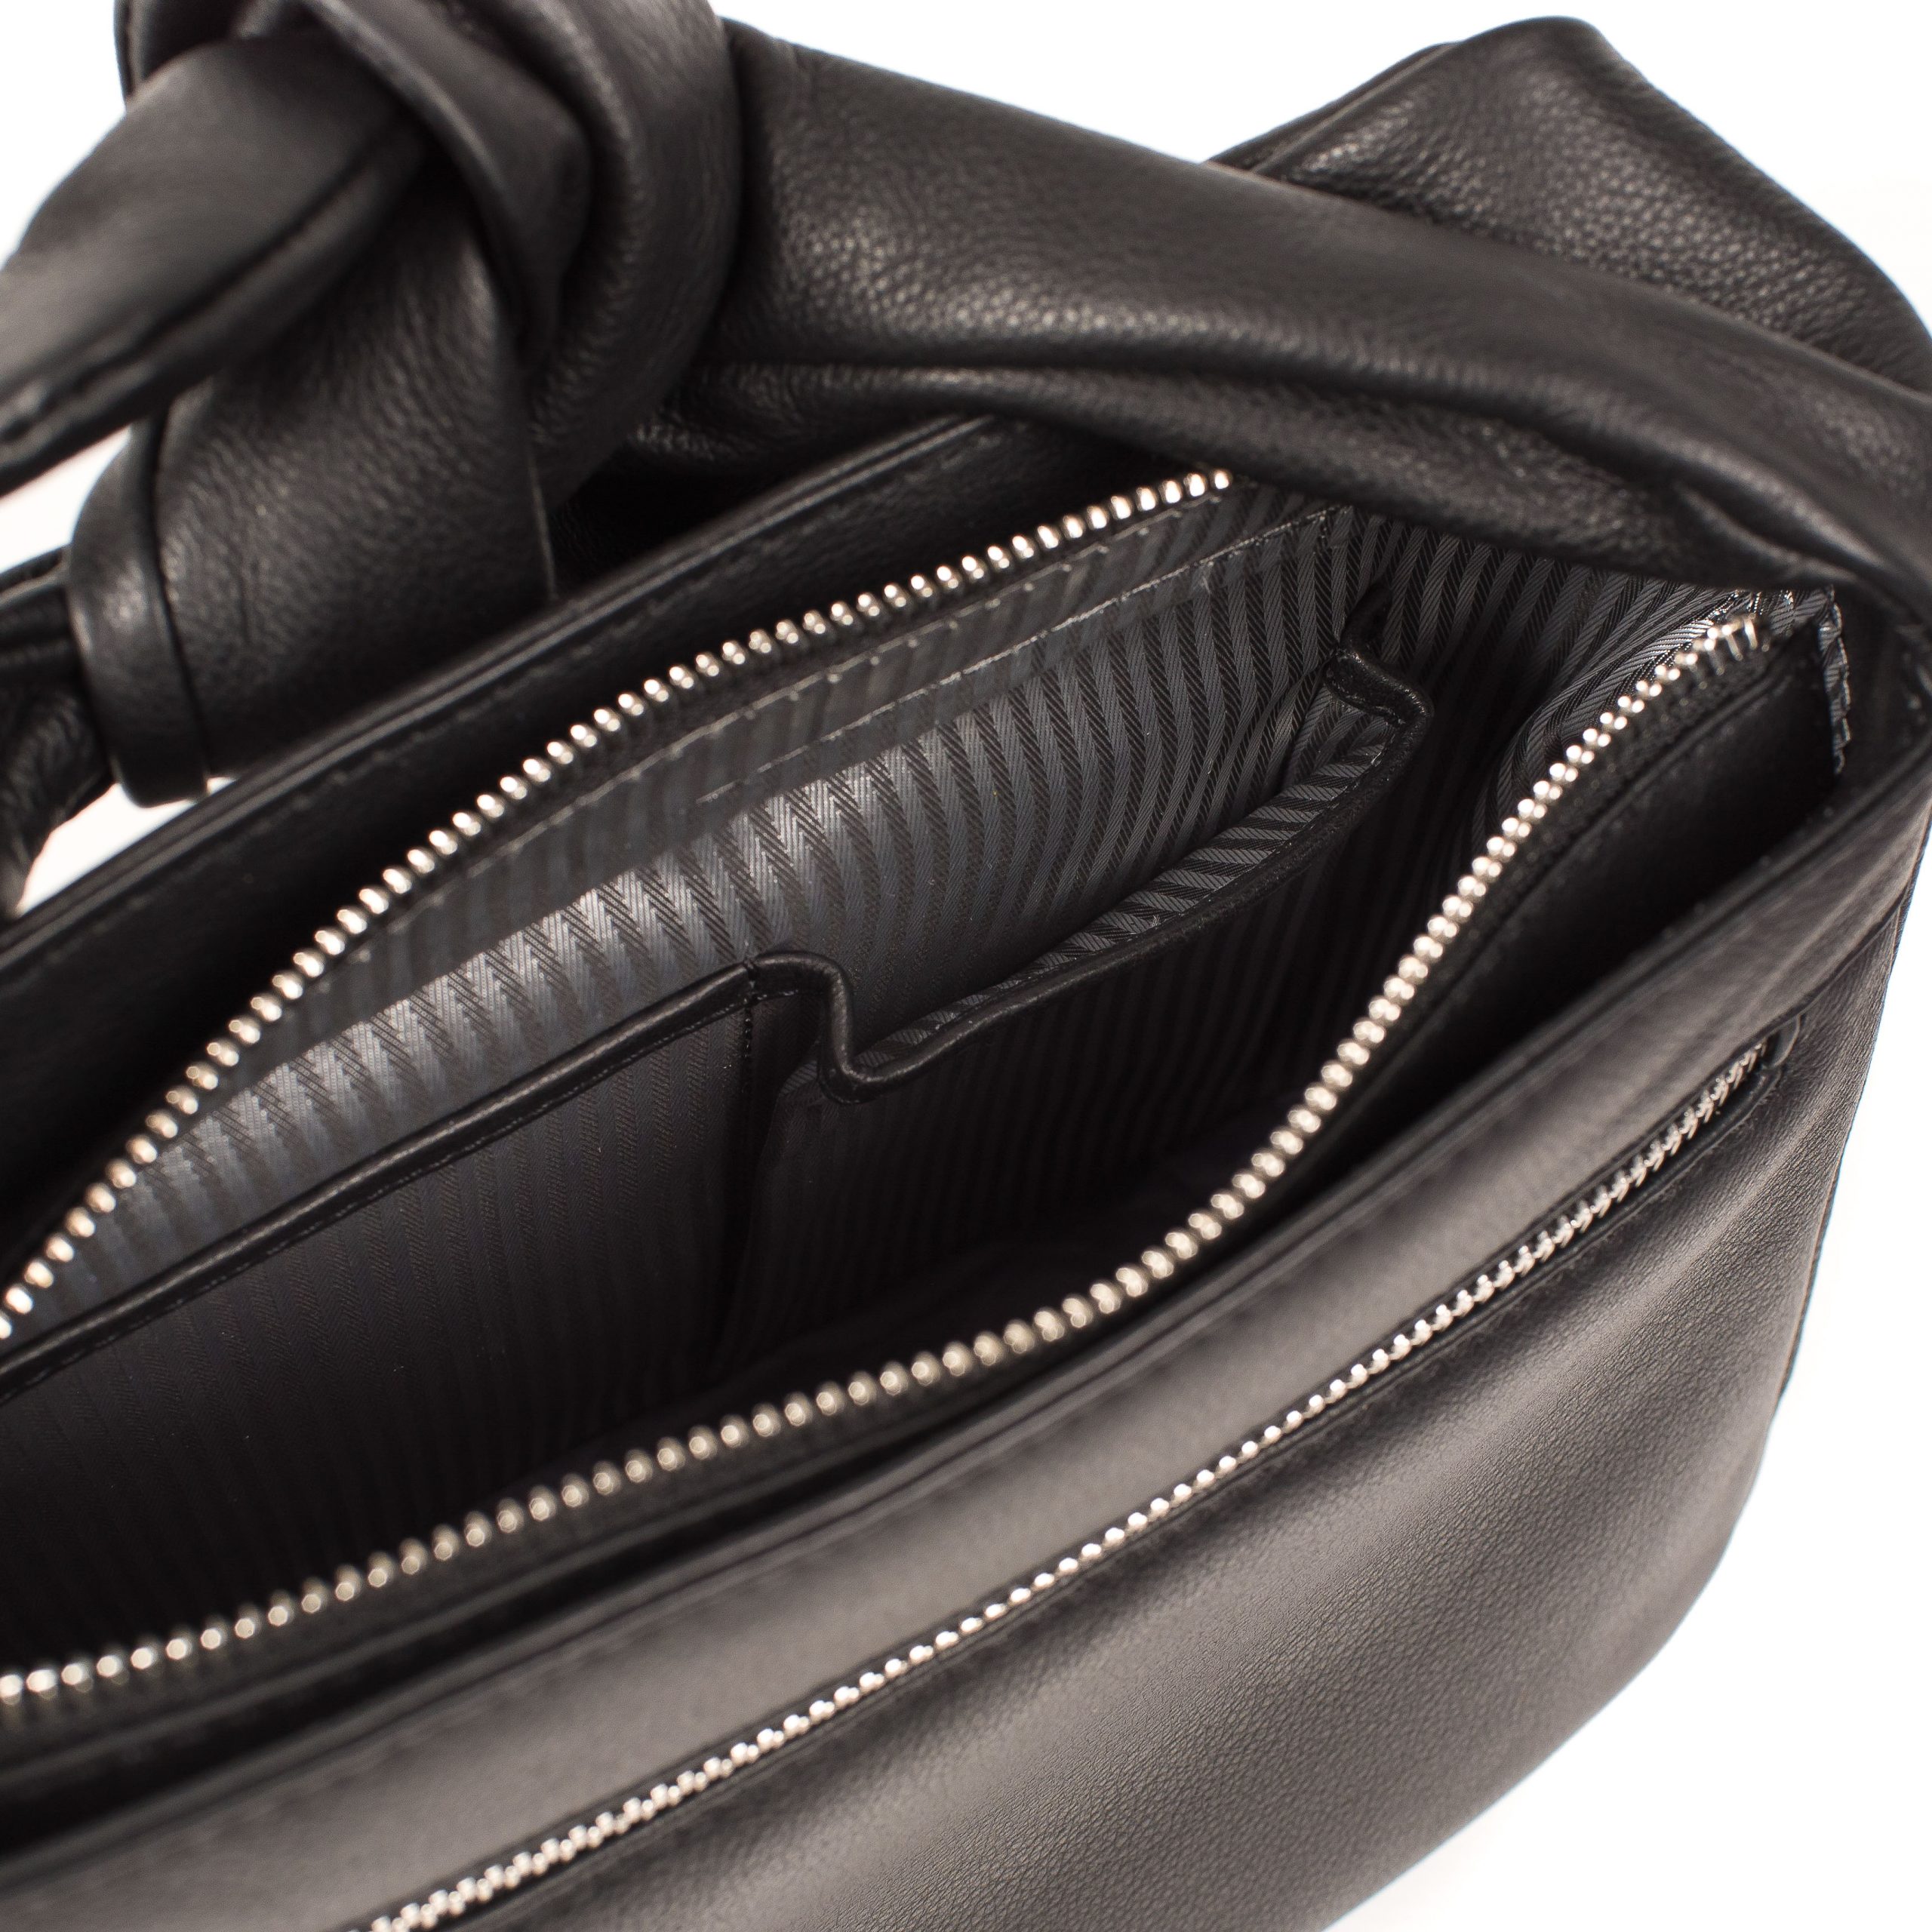 SASKIA Leather Grab Bag - Soft Leather by Lappella